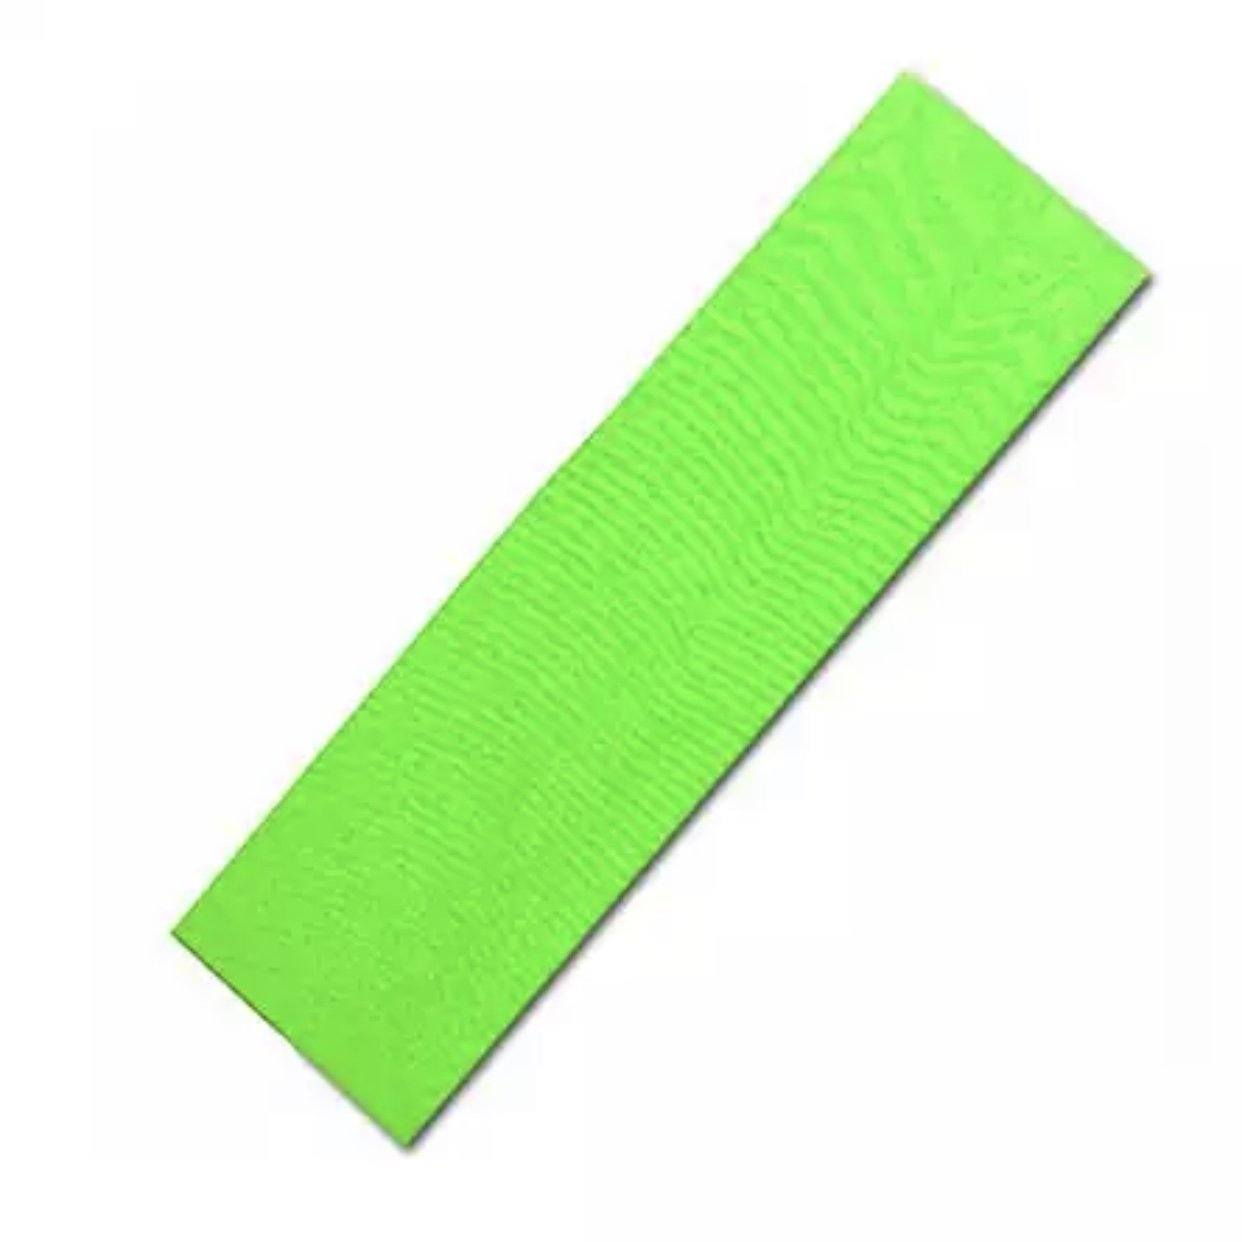 Stretch Headband for School, Sport, Yoga Headbands School Ponytails Fluoro Green 